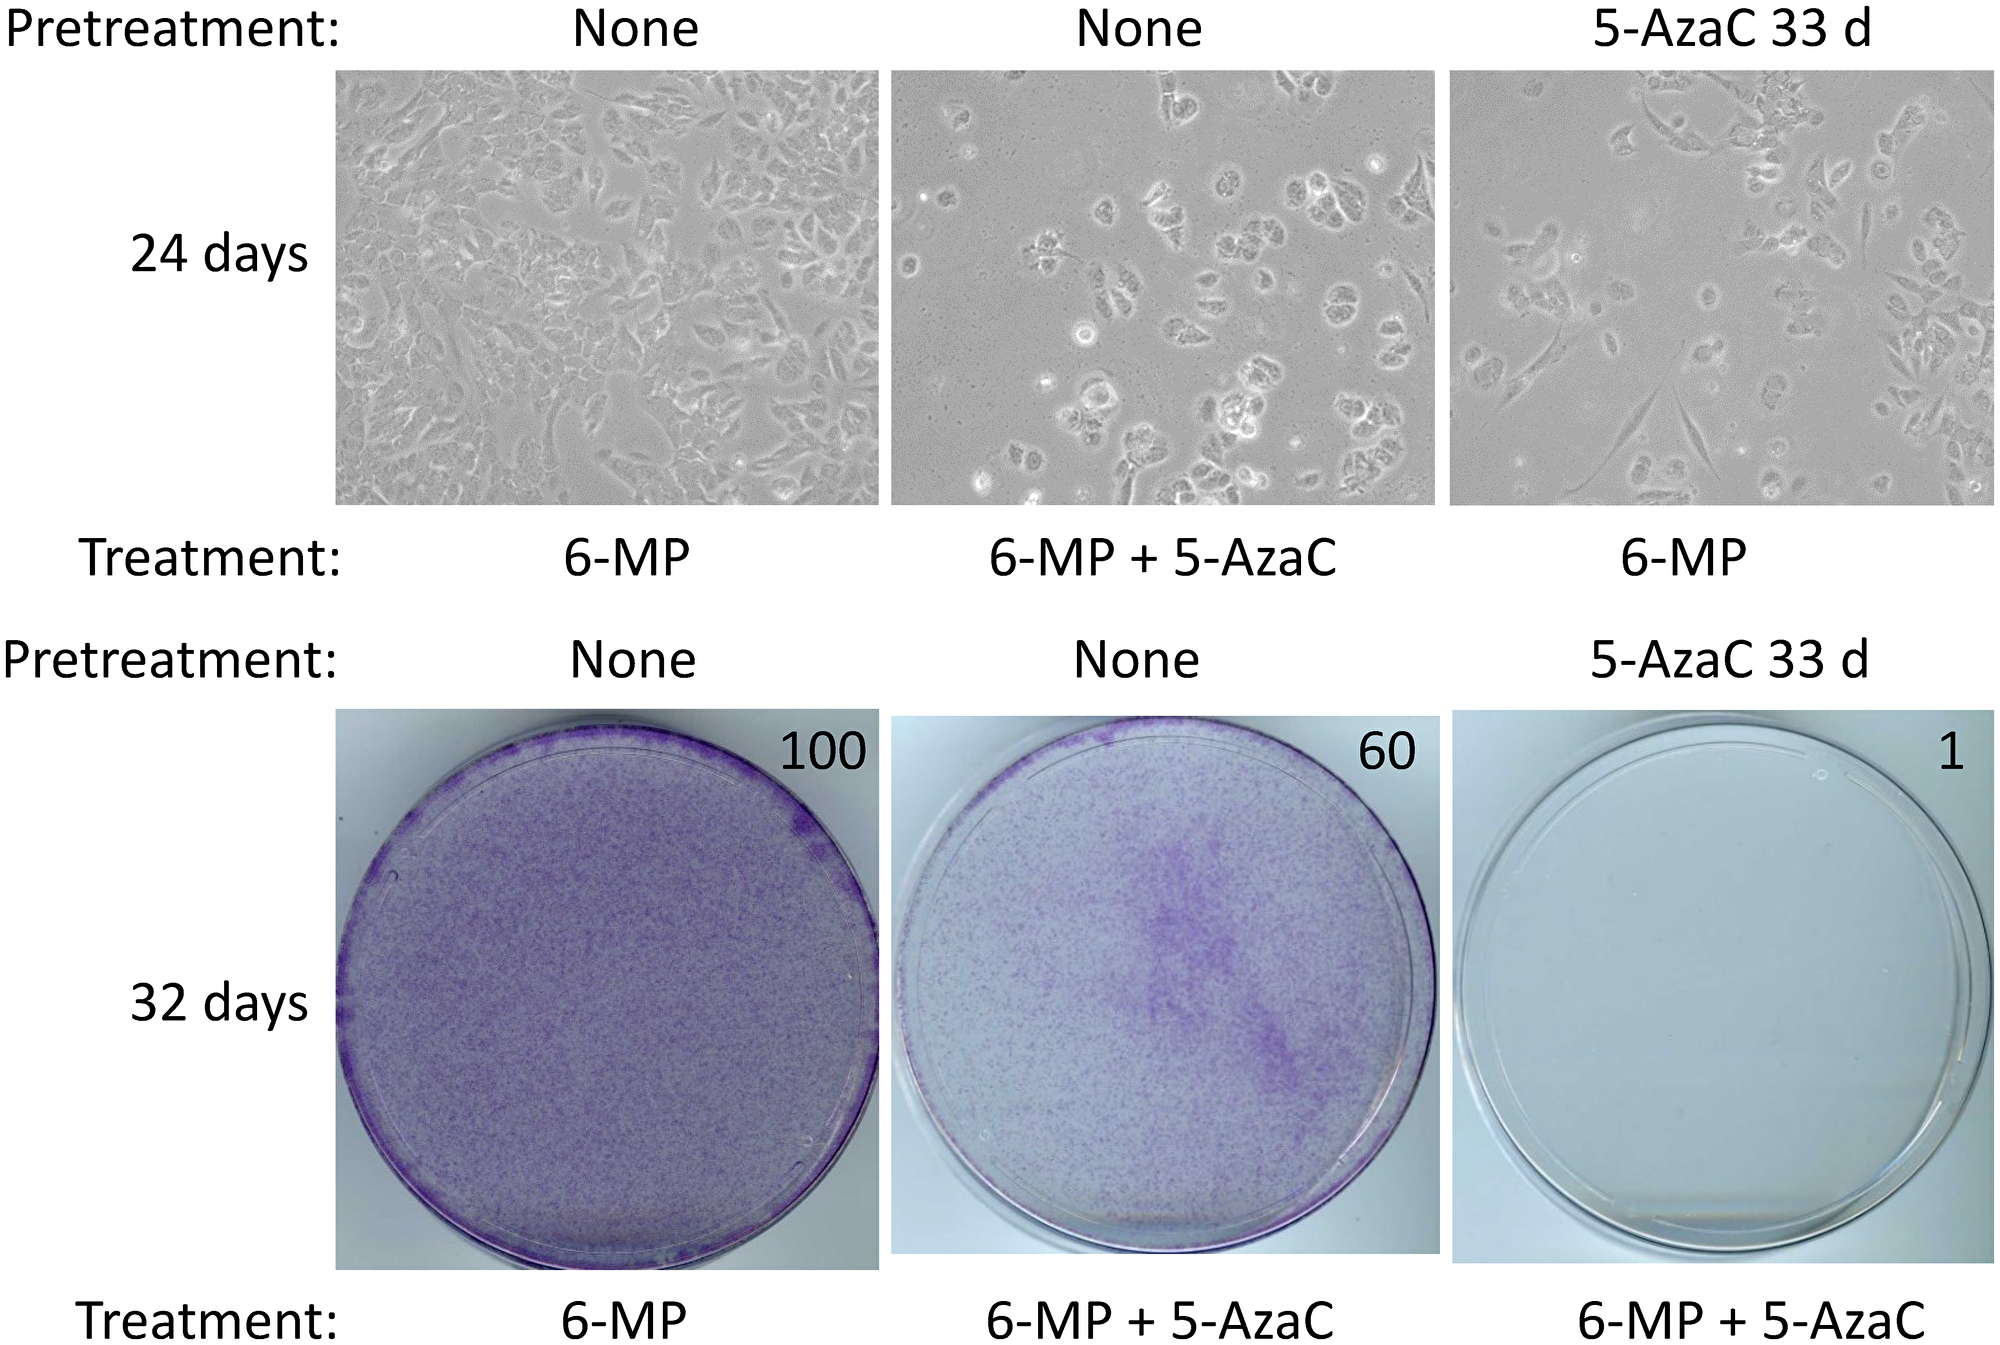 5-AzaC treatment sensitizes SUM149 cells to low-dose 6-MP.